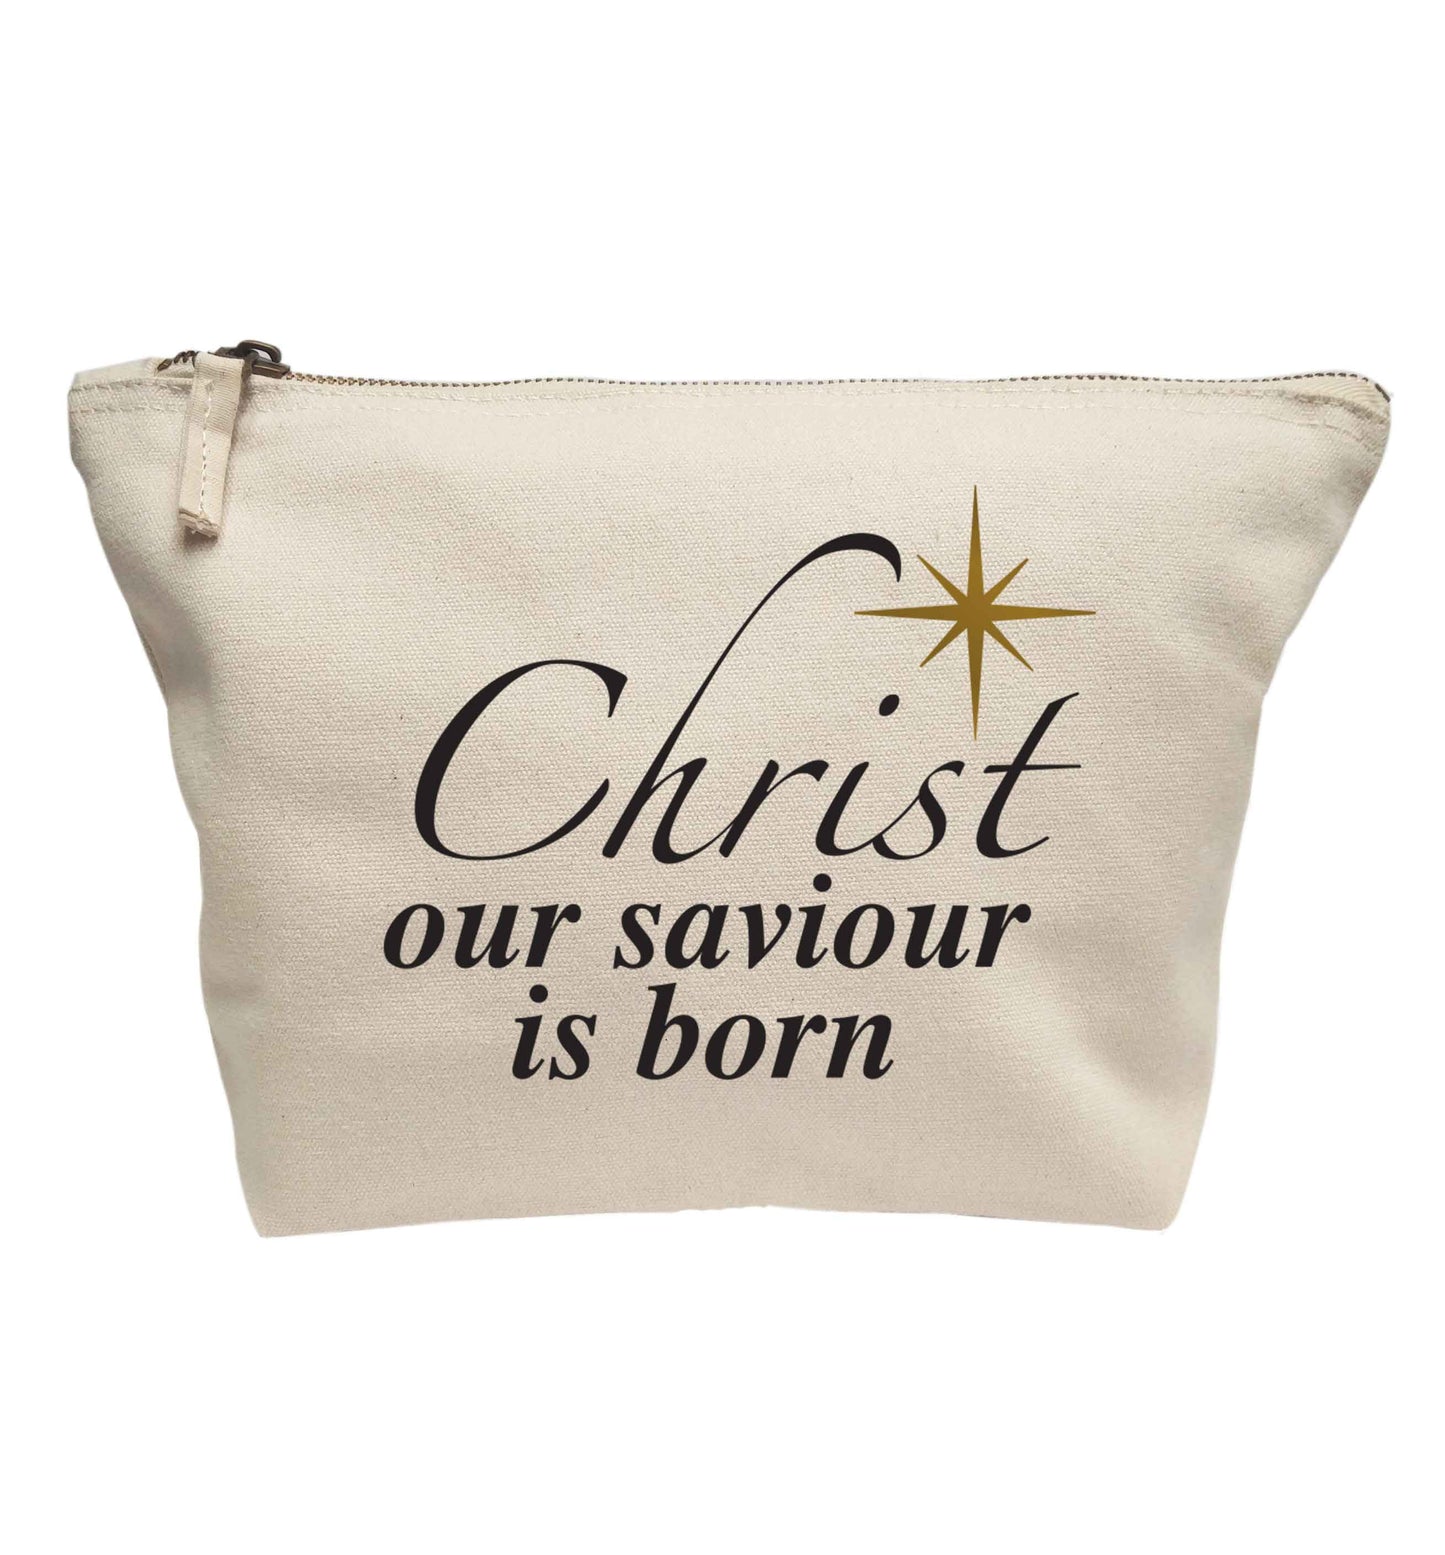 Christ our saviour is born | makeup / wash bag